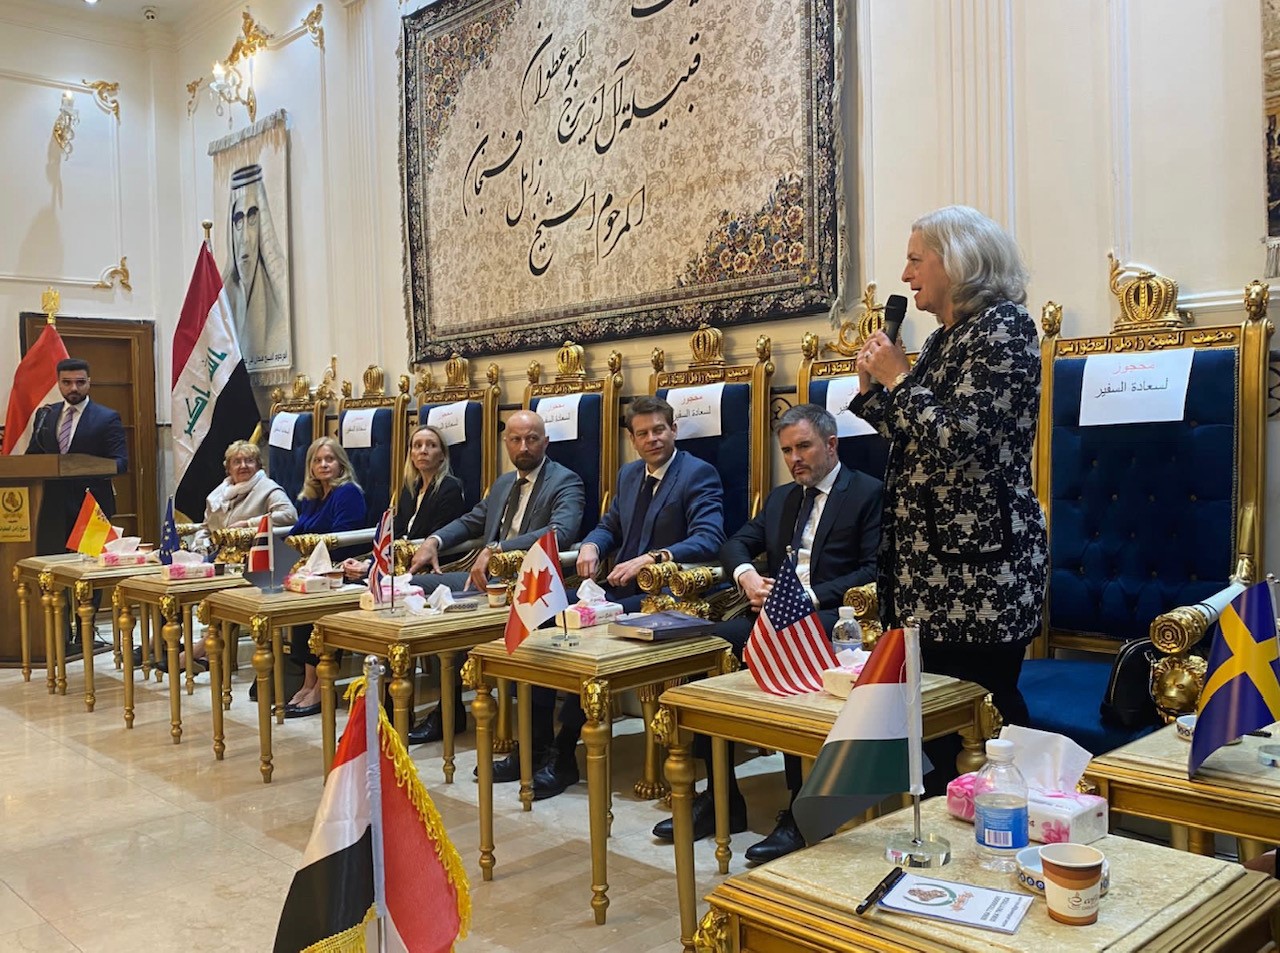 US ambassador hosts Iftar meal with Iraqi tribal sheikhs, diplomatic figures